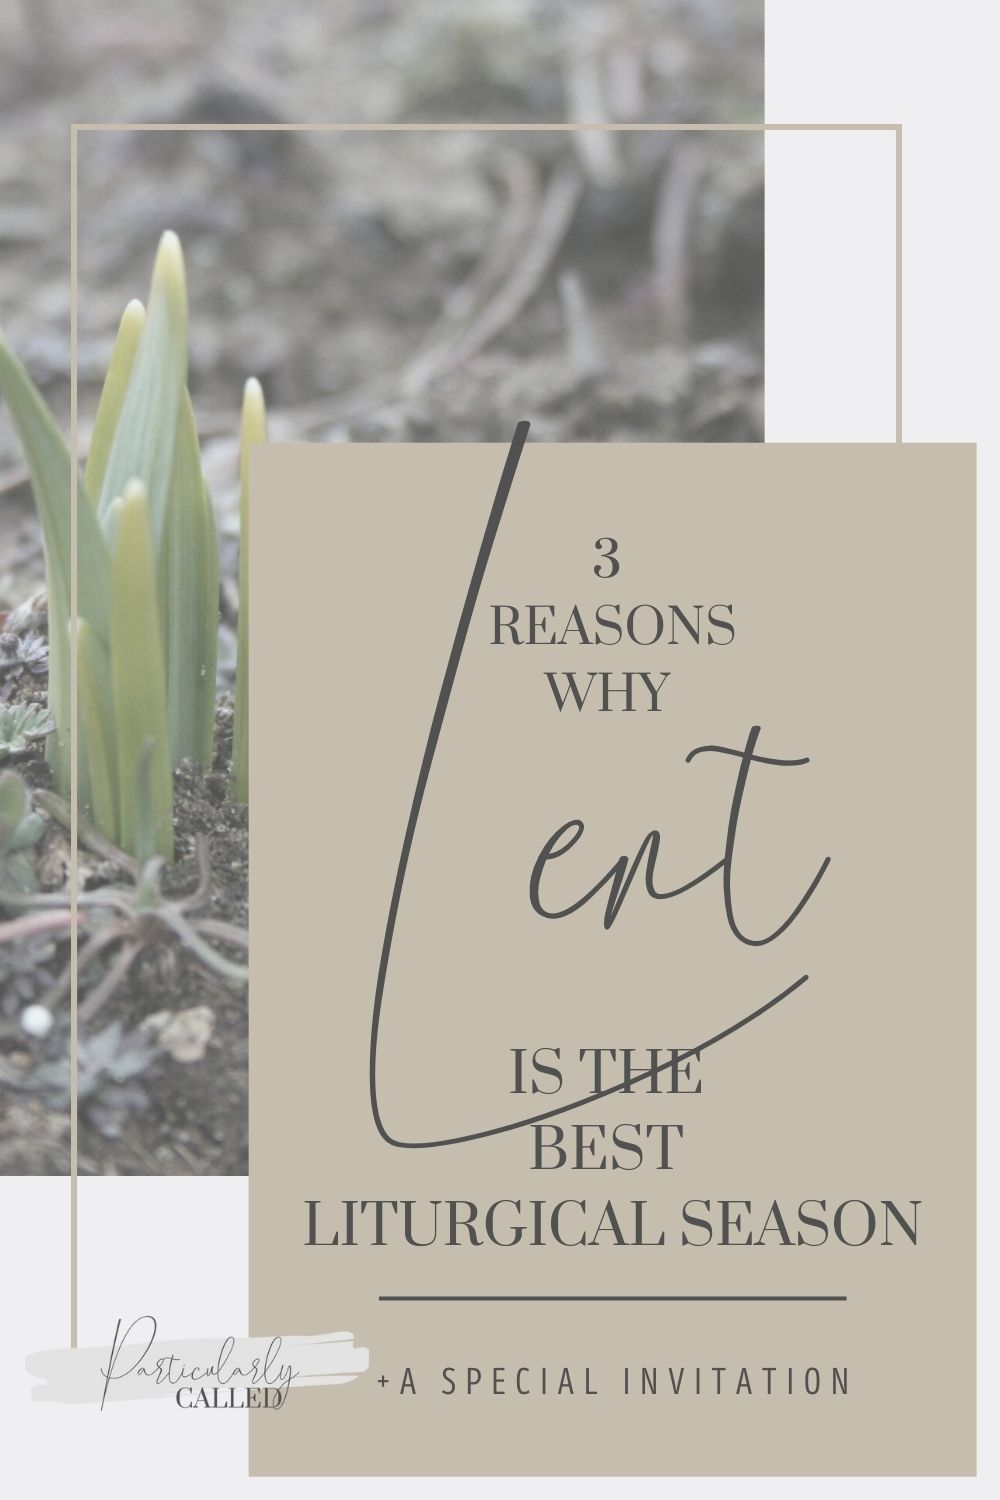 lent is the best liturgical season